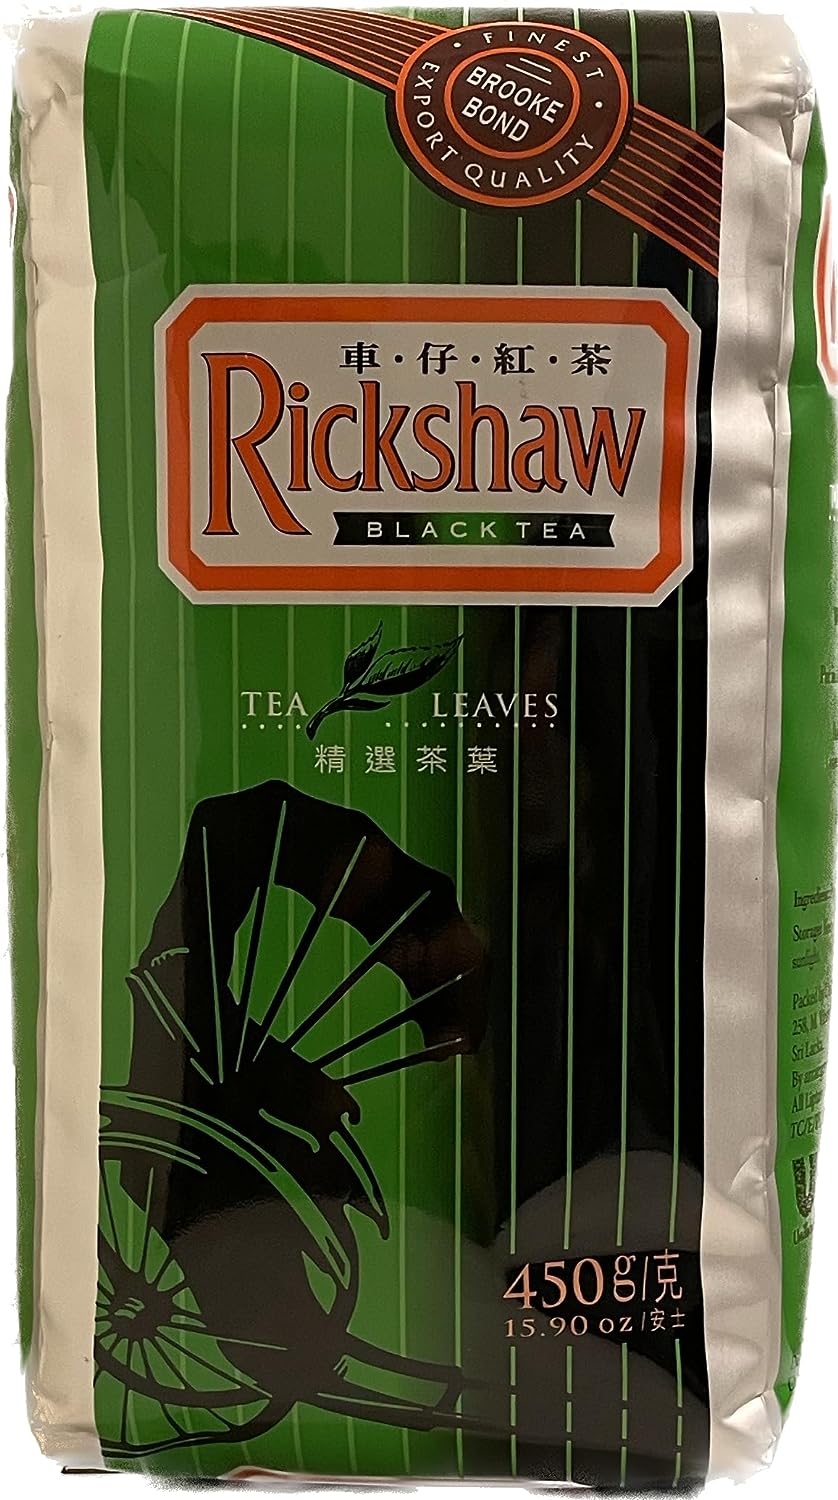 Rickshaw Black Tea